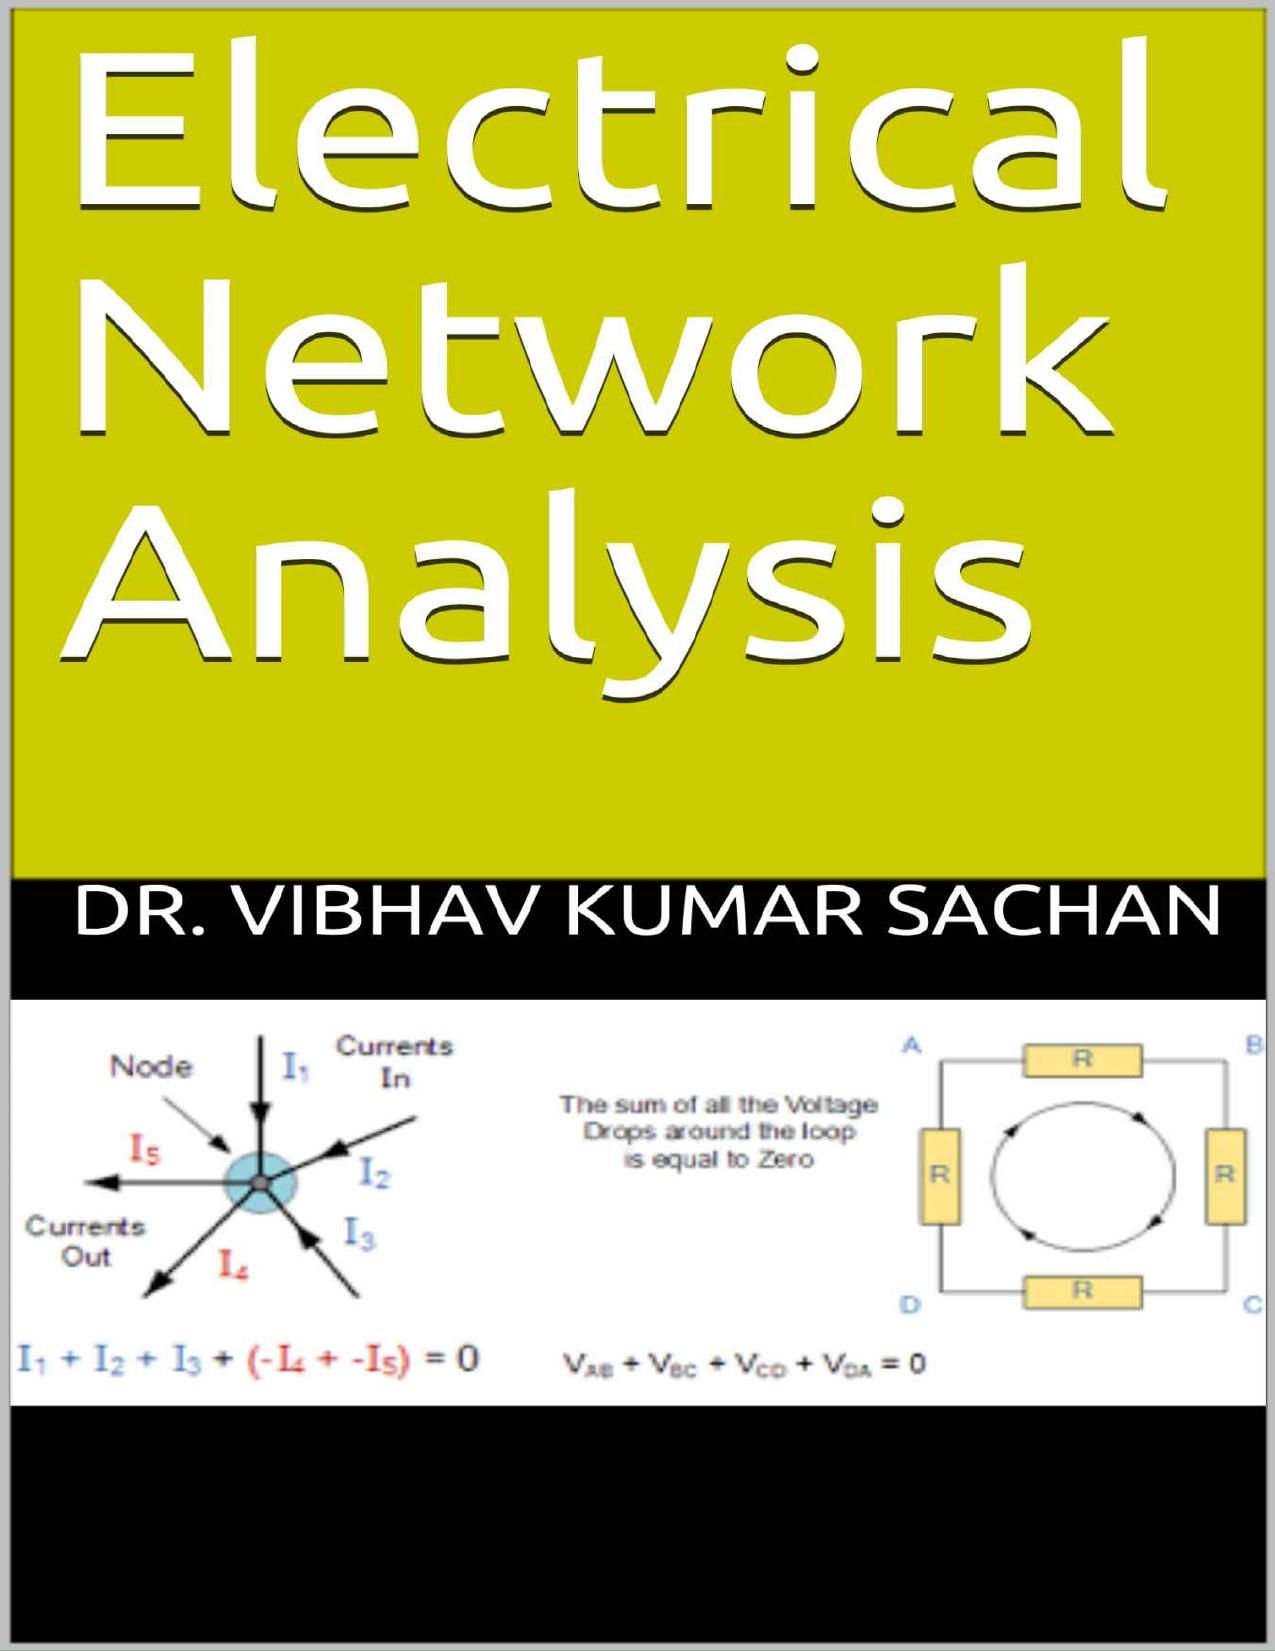 Electrical Network Analysis (Sachan Book 30) by Dr. Vibhav Kumar Sachan